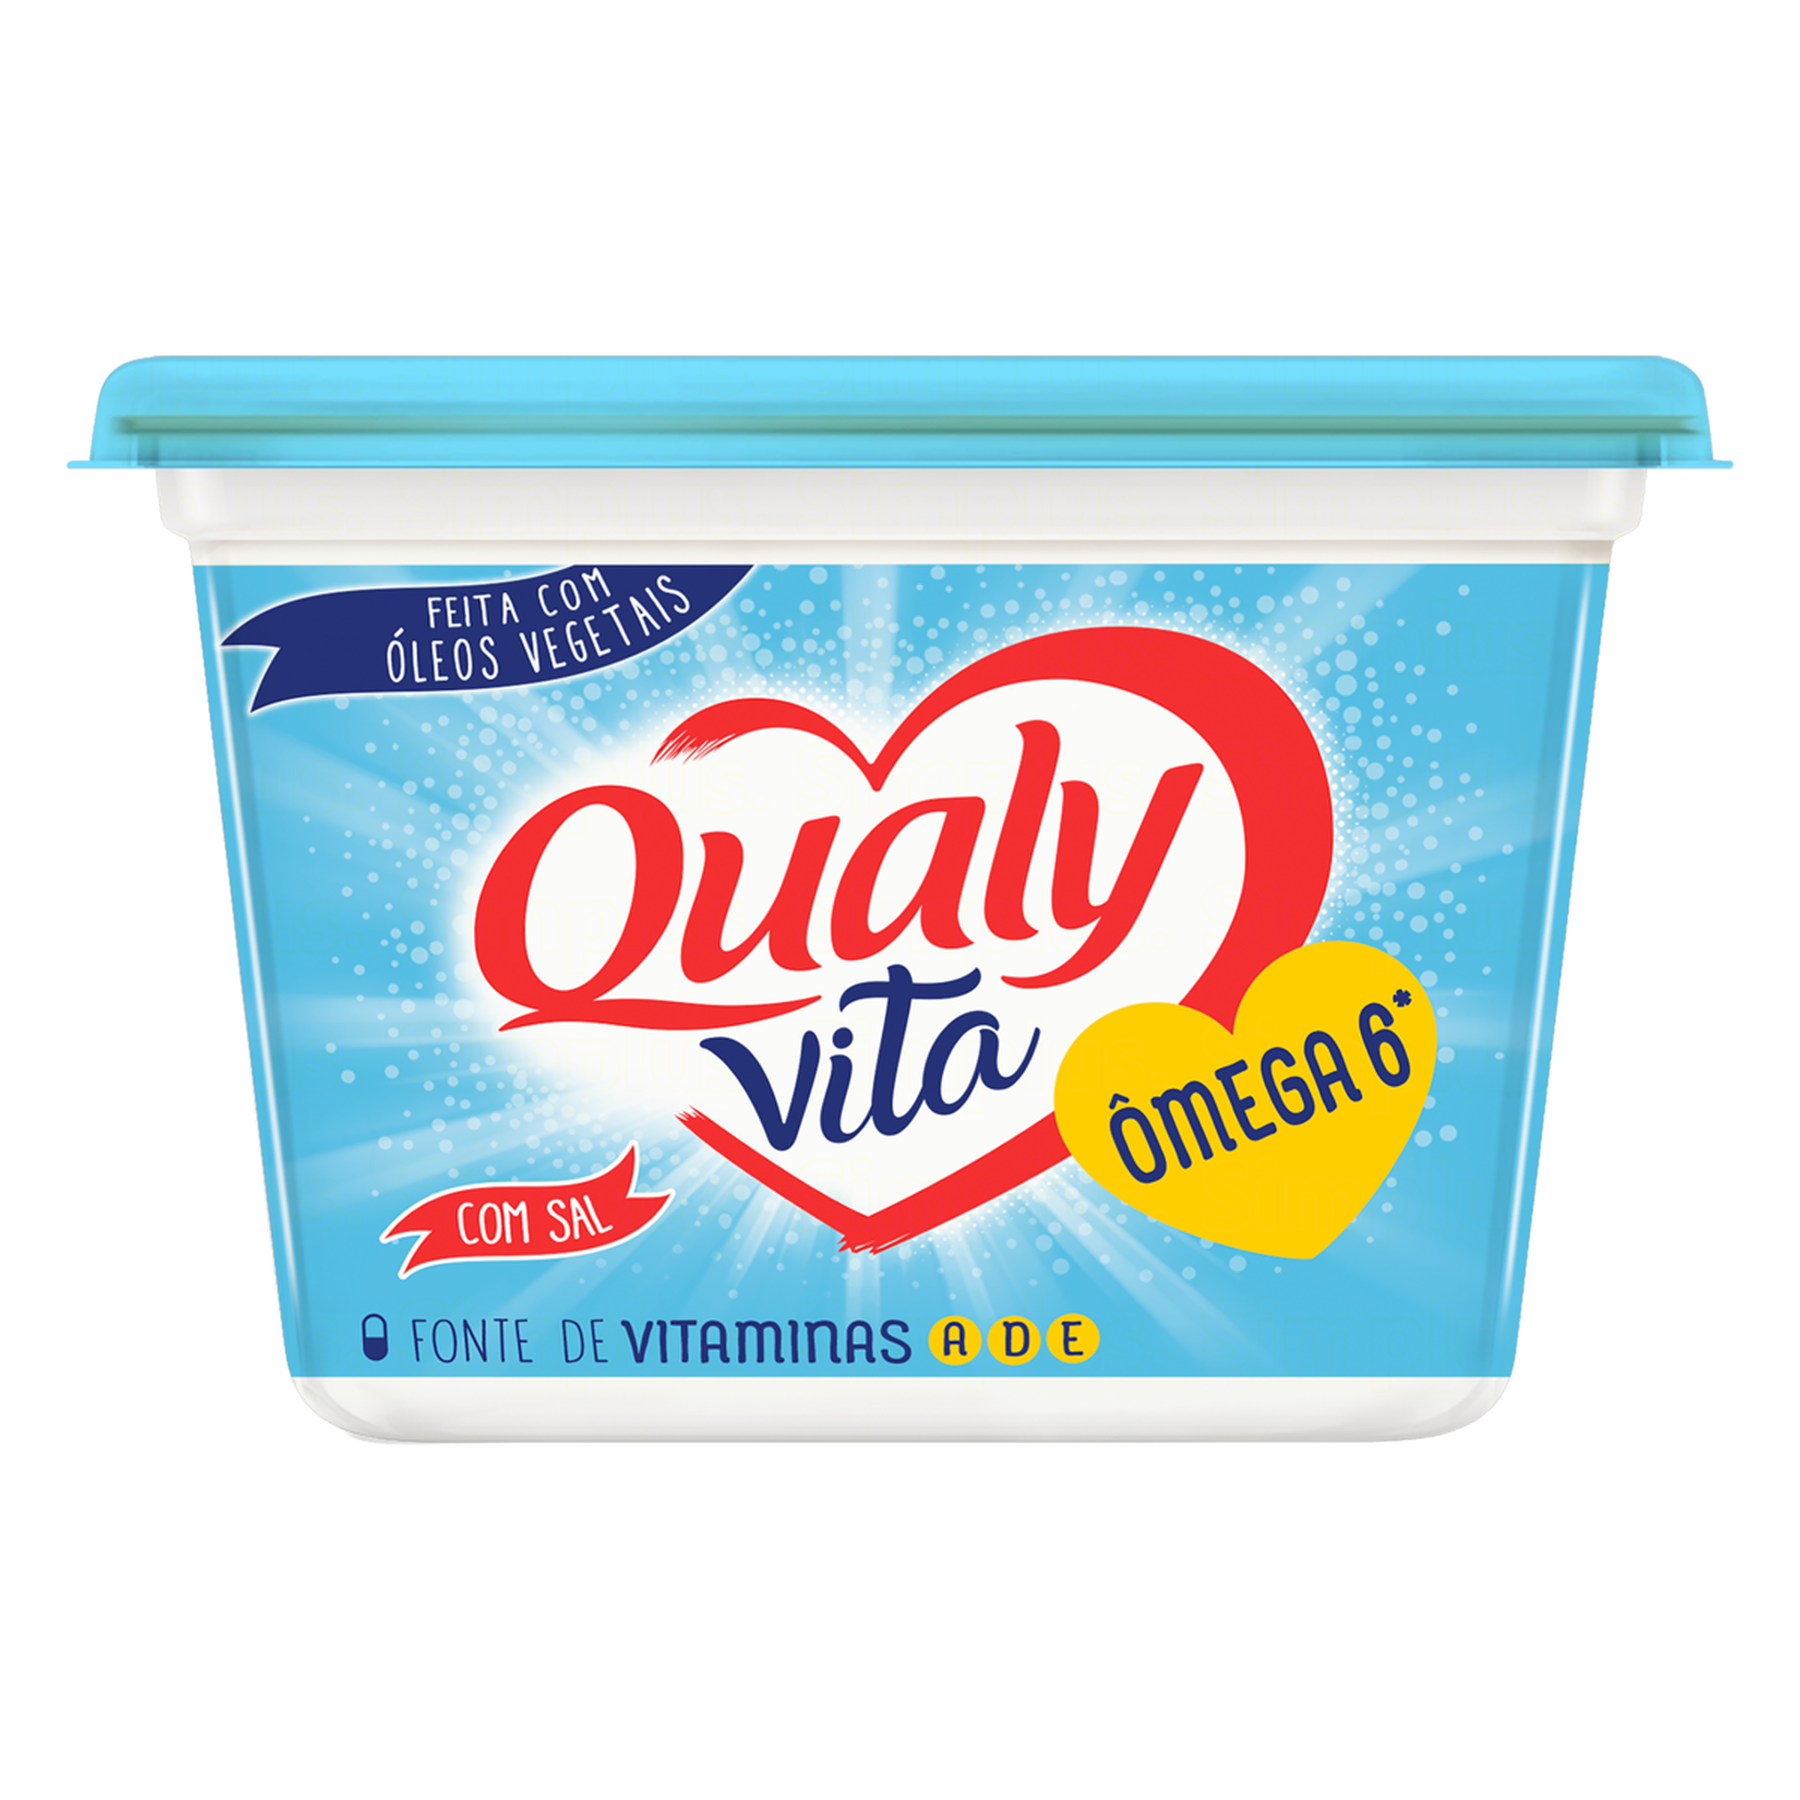 Margarina com Sal Vita Qualy Pote 500g 